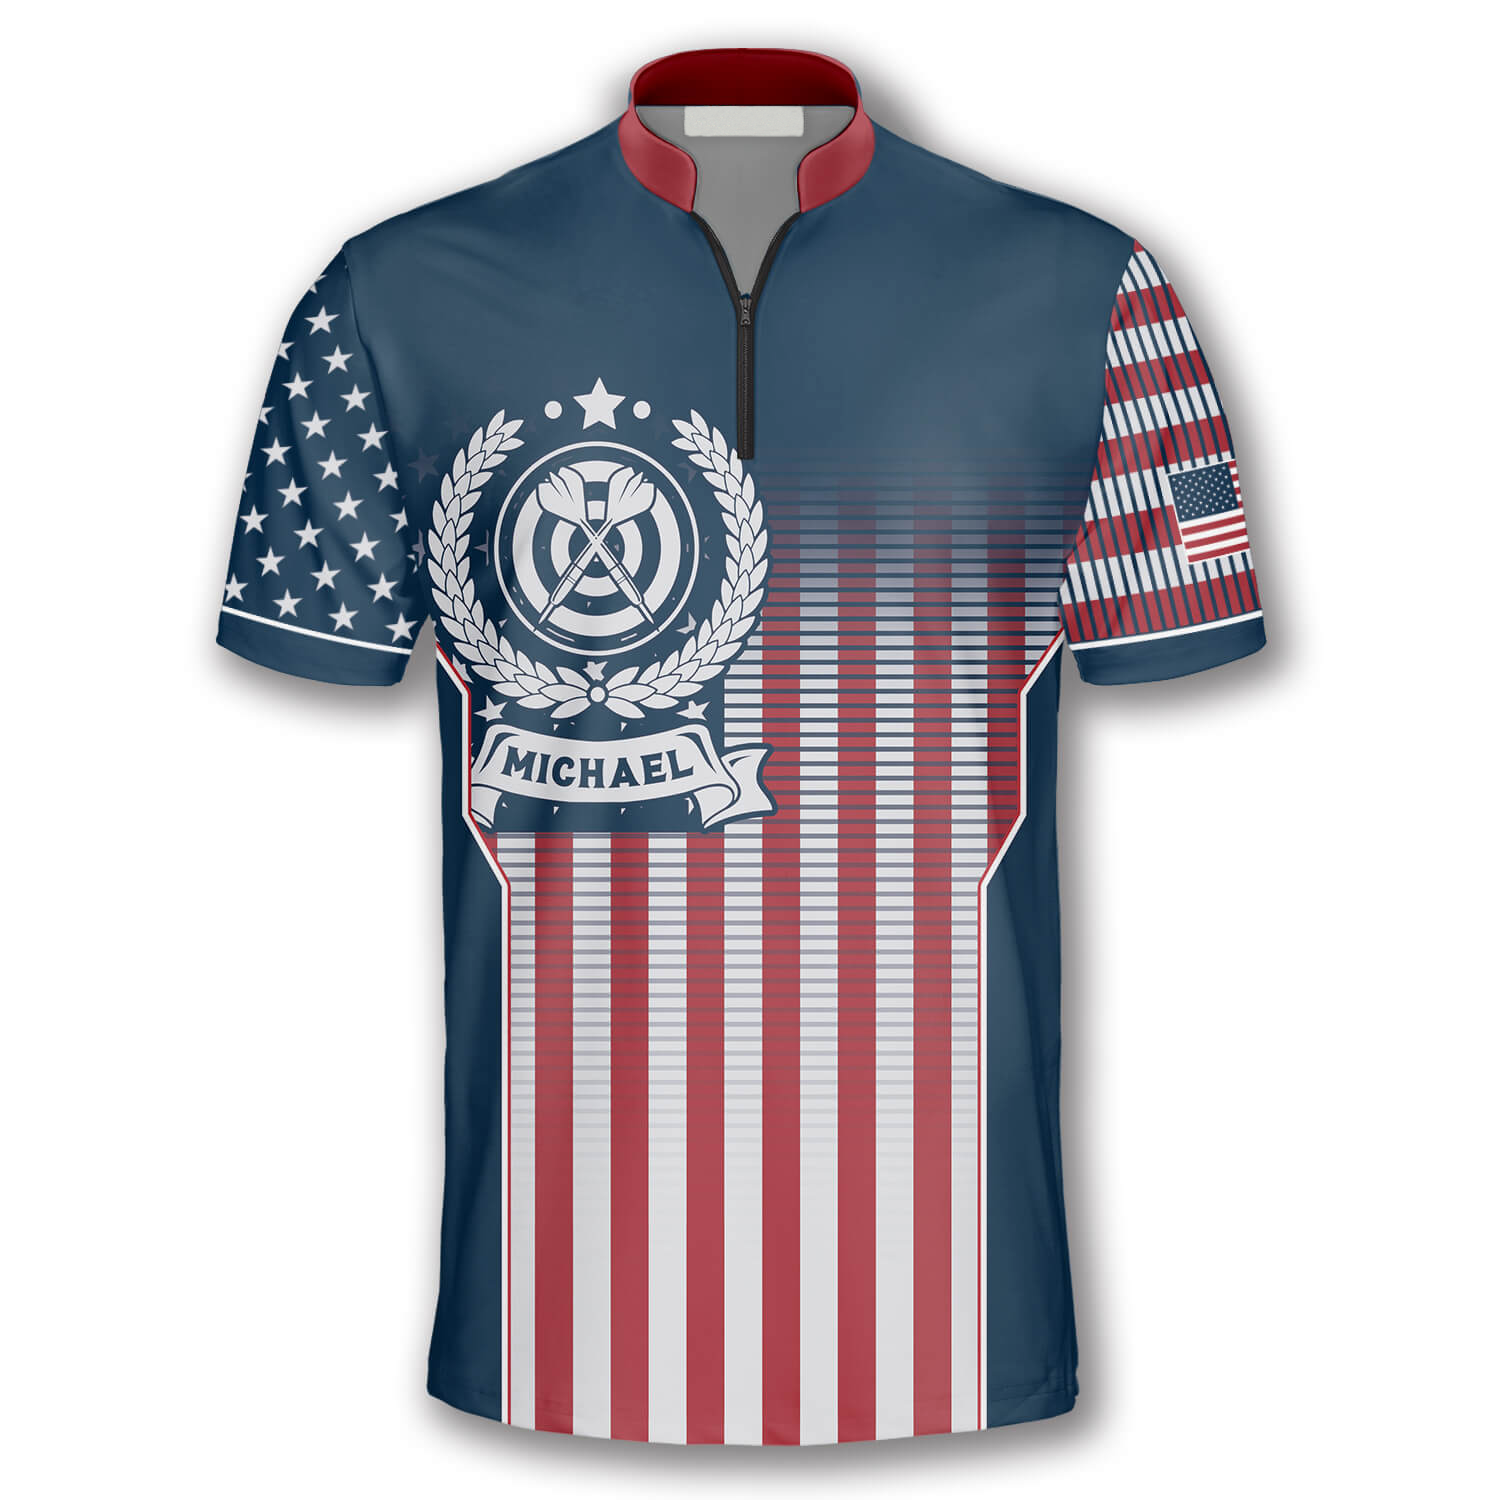 Gradient USA Flag Custom Darts Jerseys for Men/ Uniform 3D Shirt for Dart Team